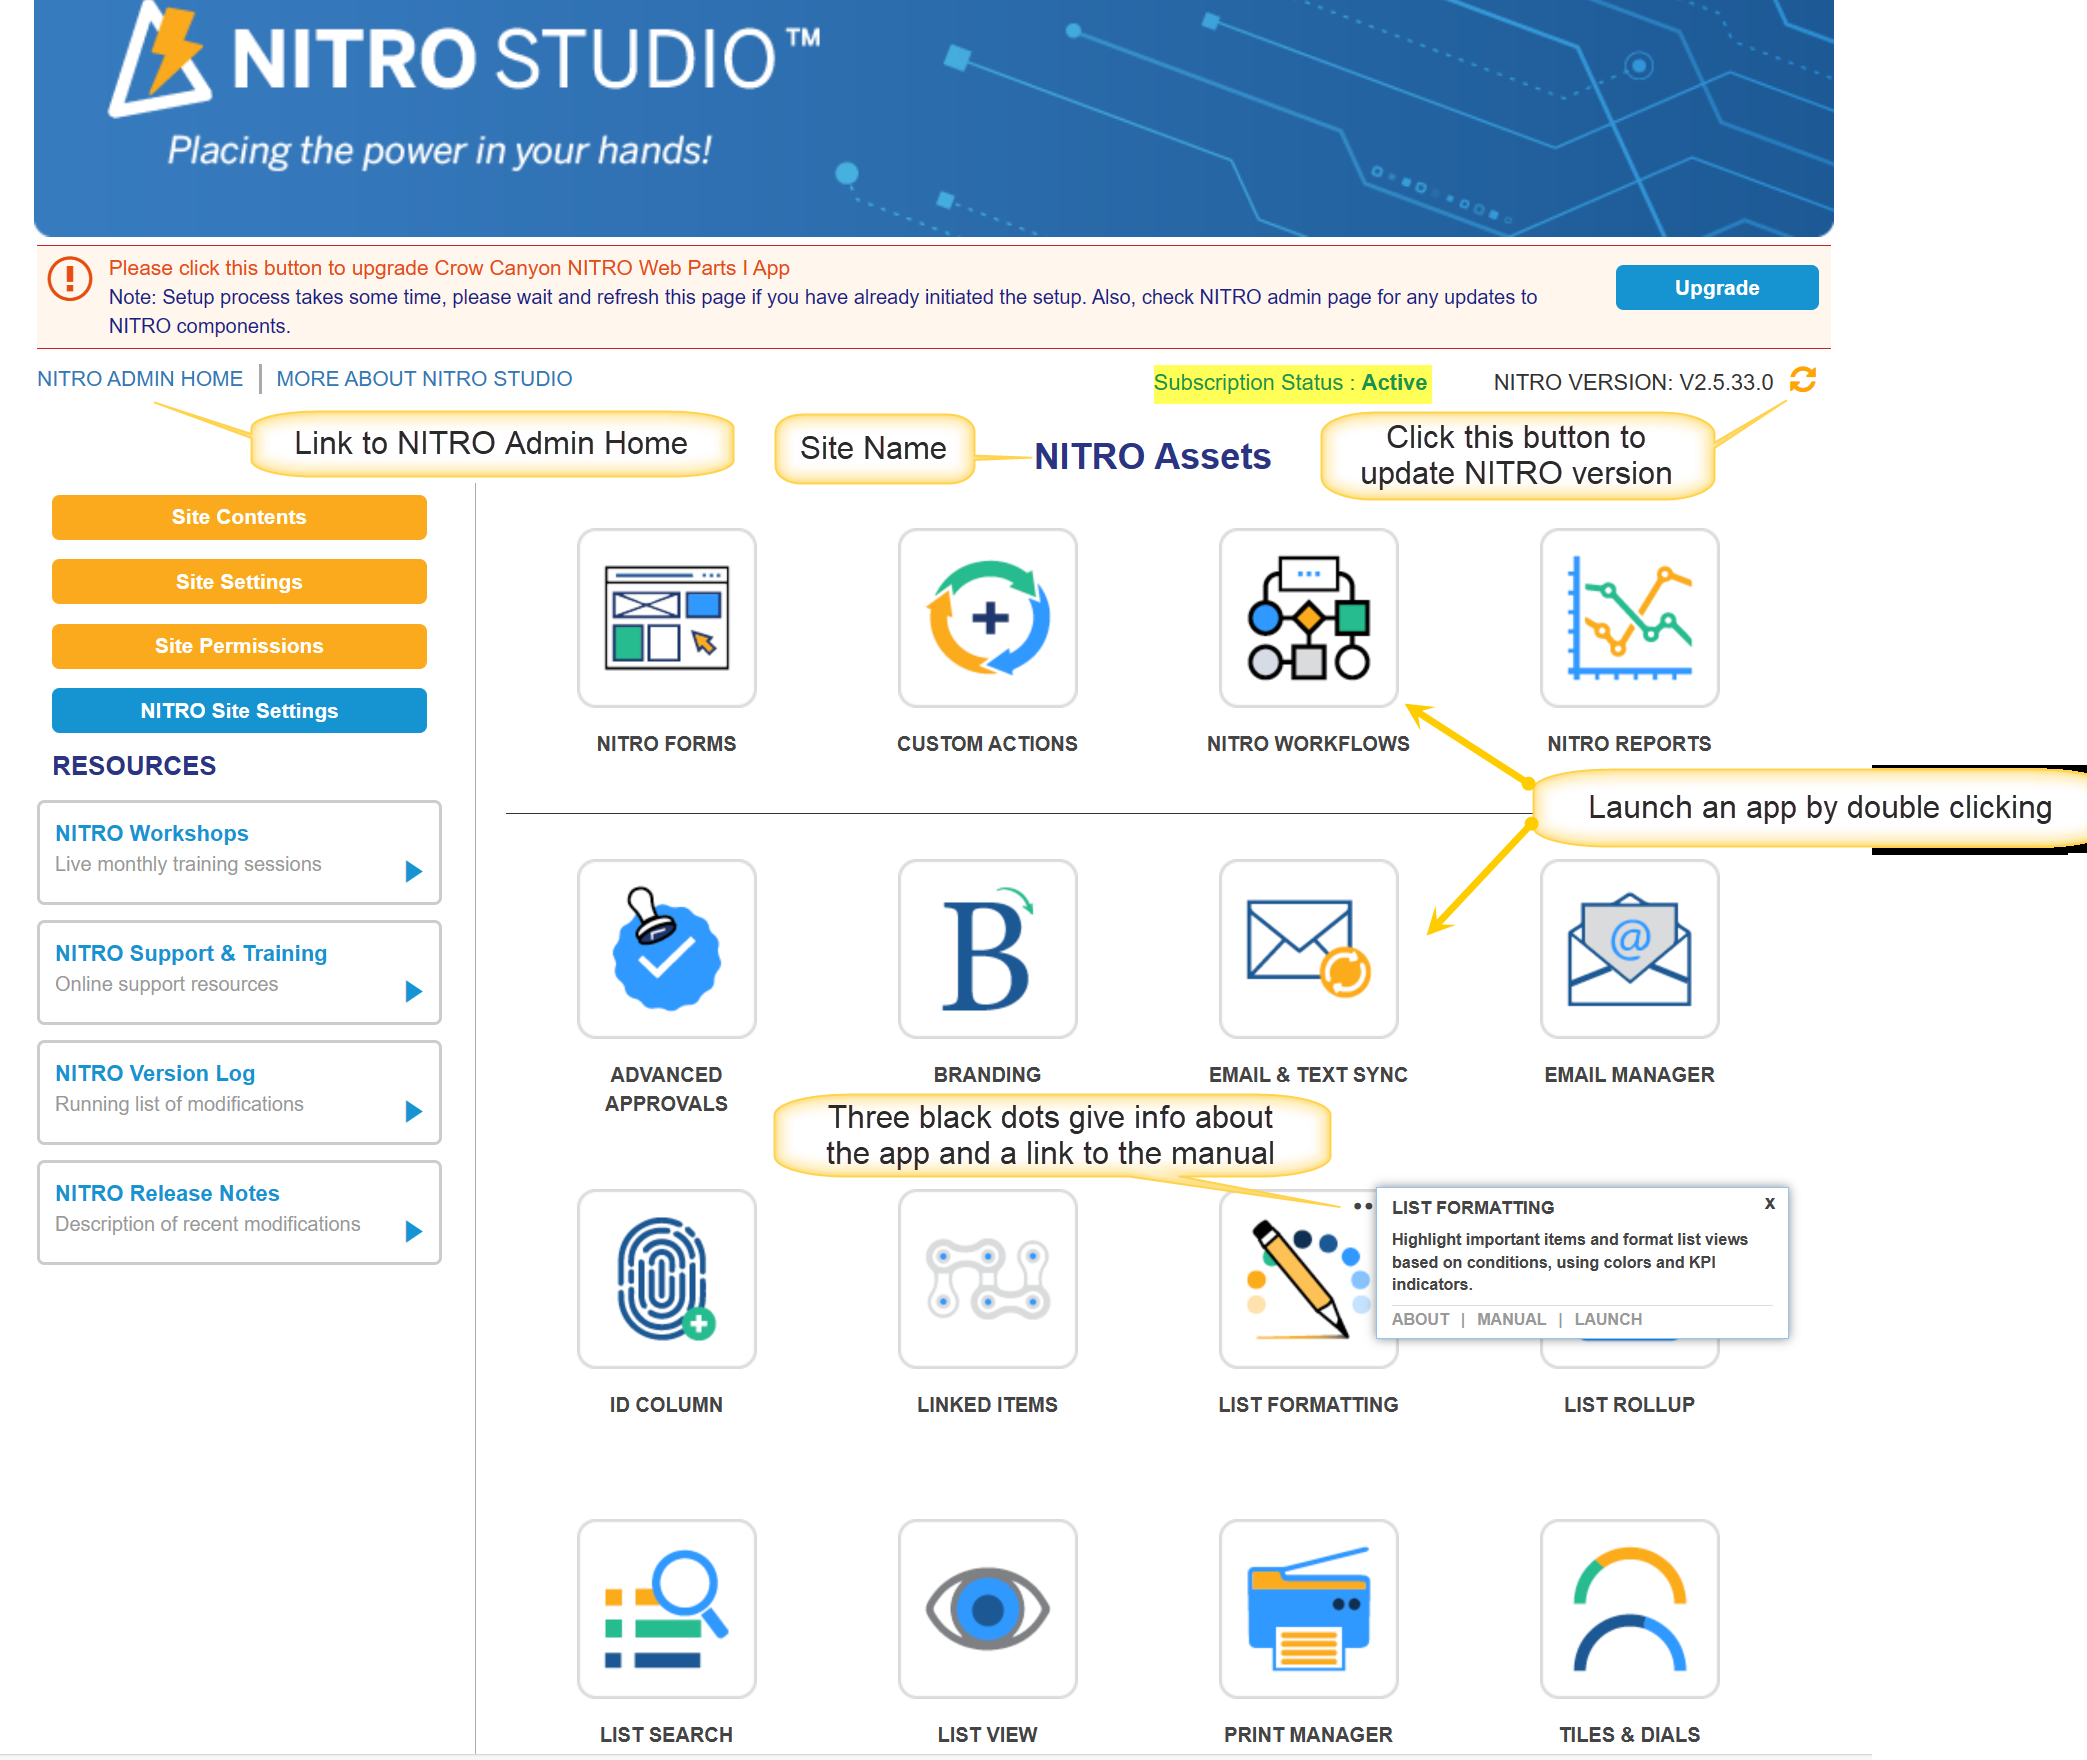 NITRO Studio image 1